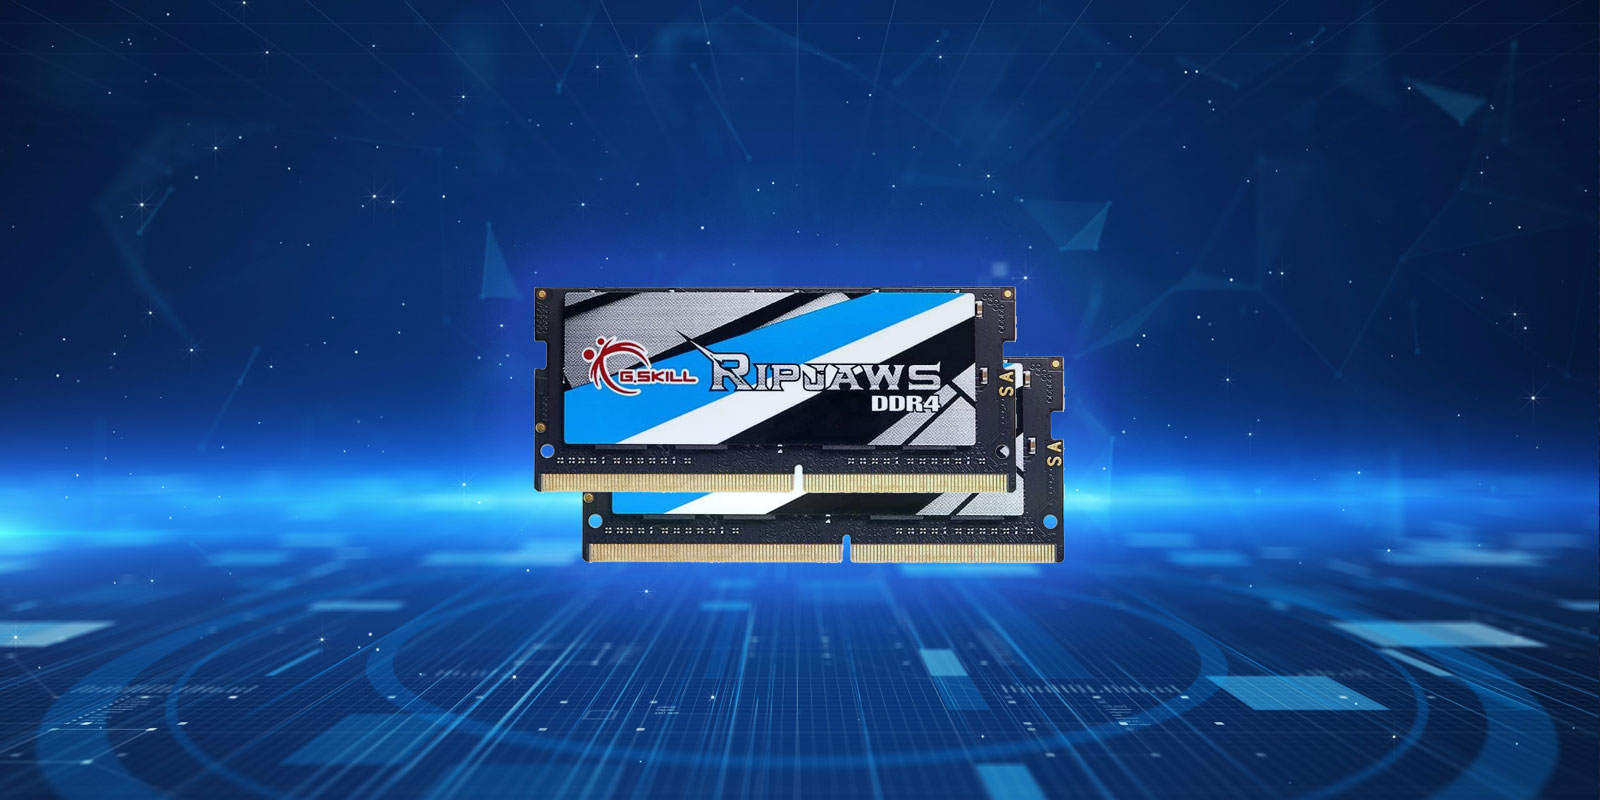 G. Skill Ripjaws DDR4 SODIMM RAM Review